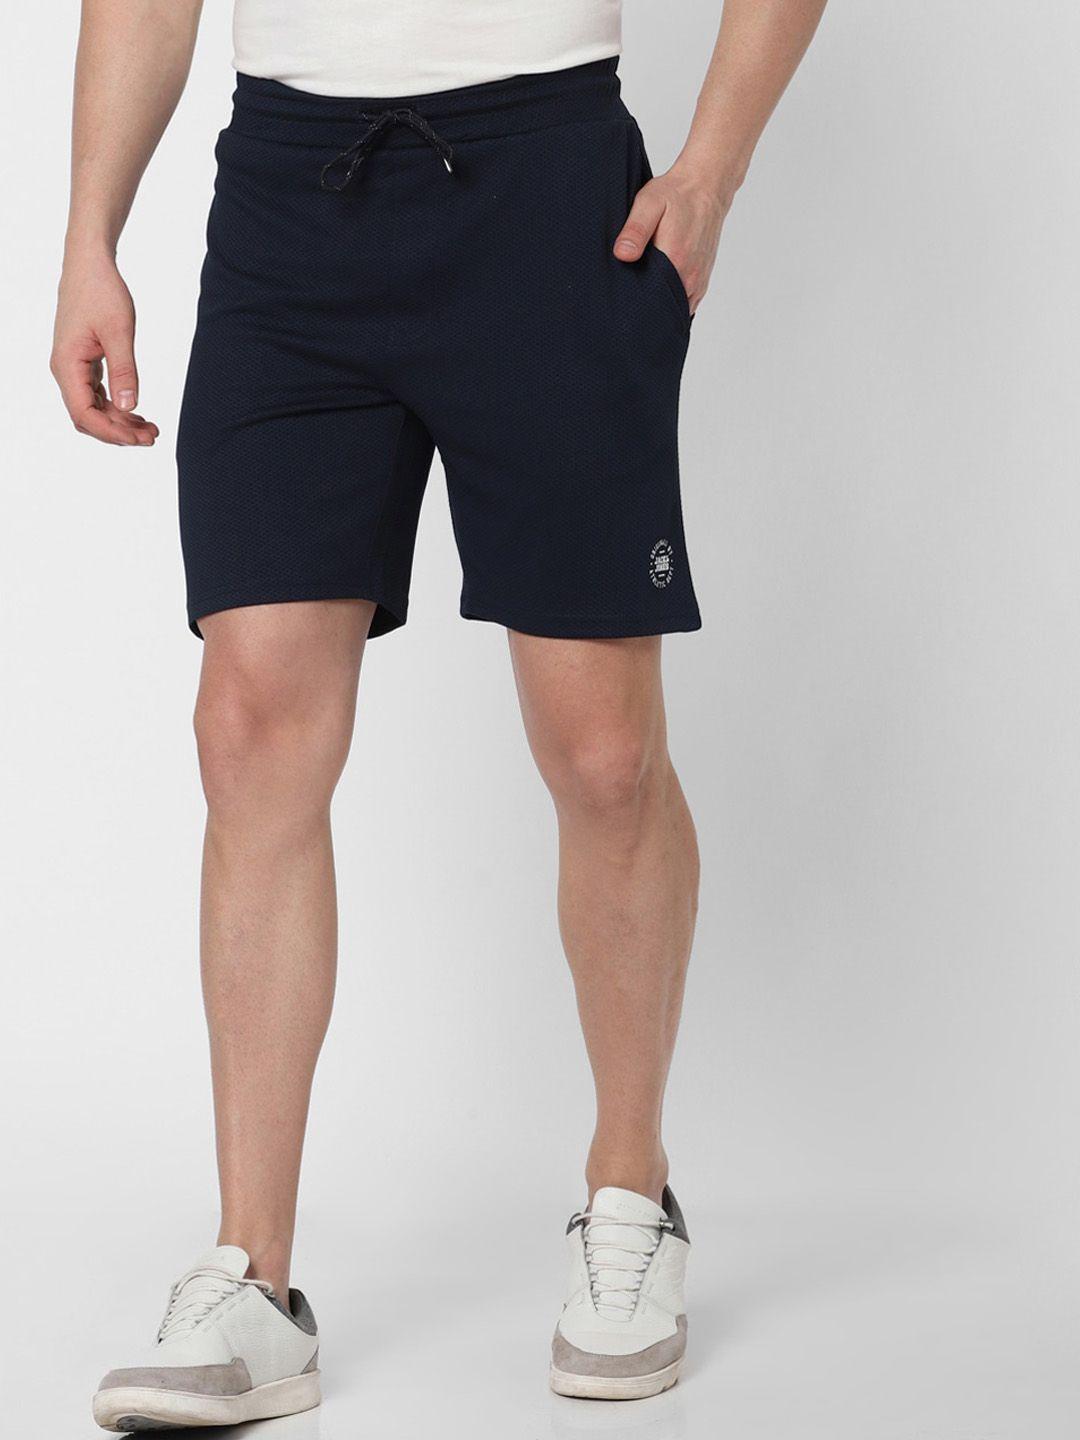 jack-&-jones-men-training-or-gym-sports-shorts